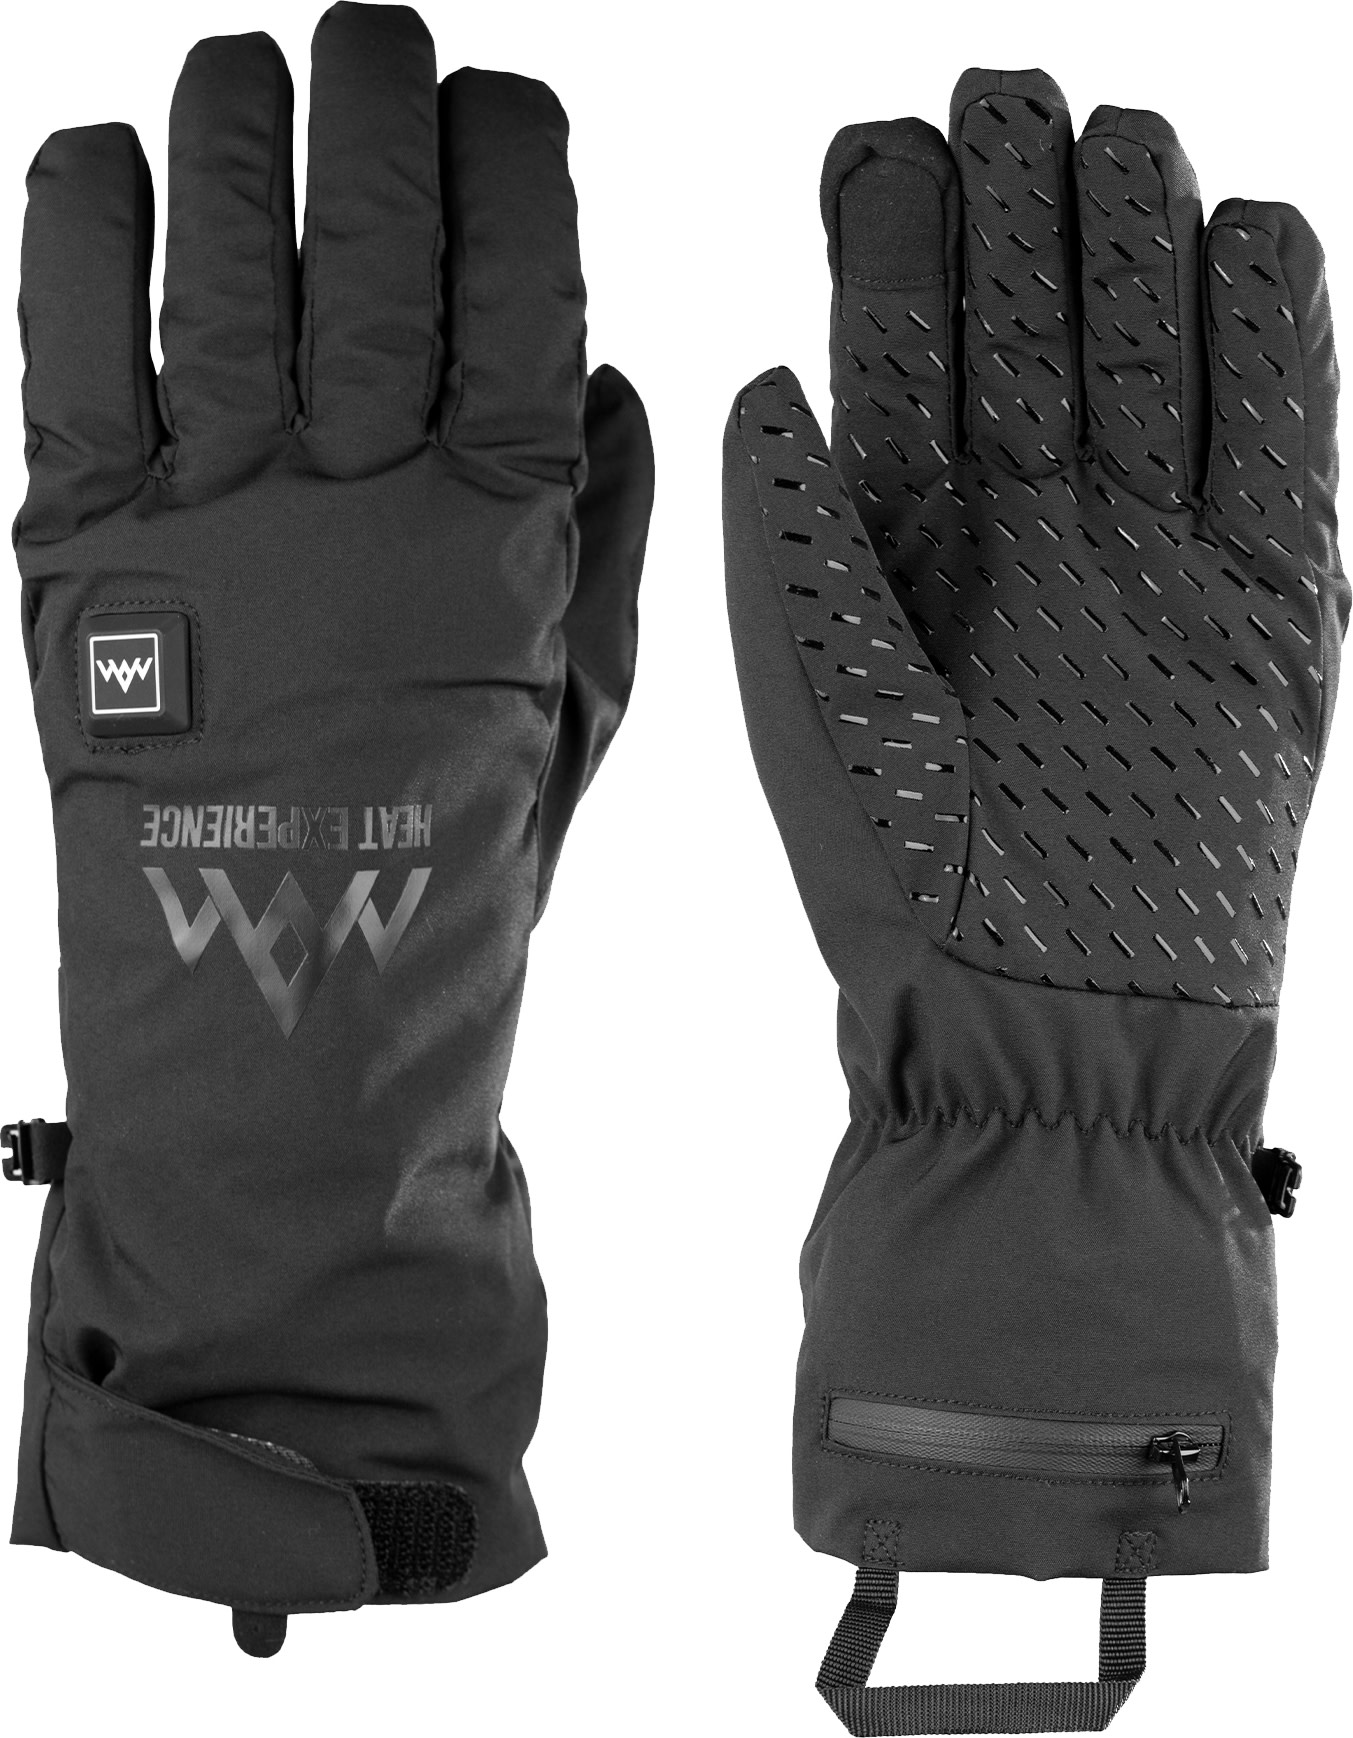 Heat Experience Heated Everyday Gloves Black